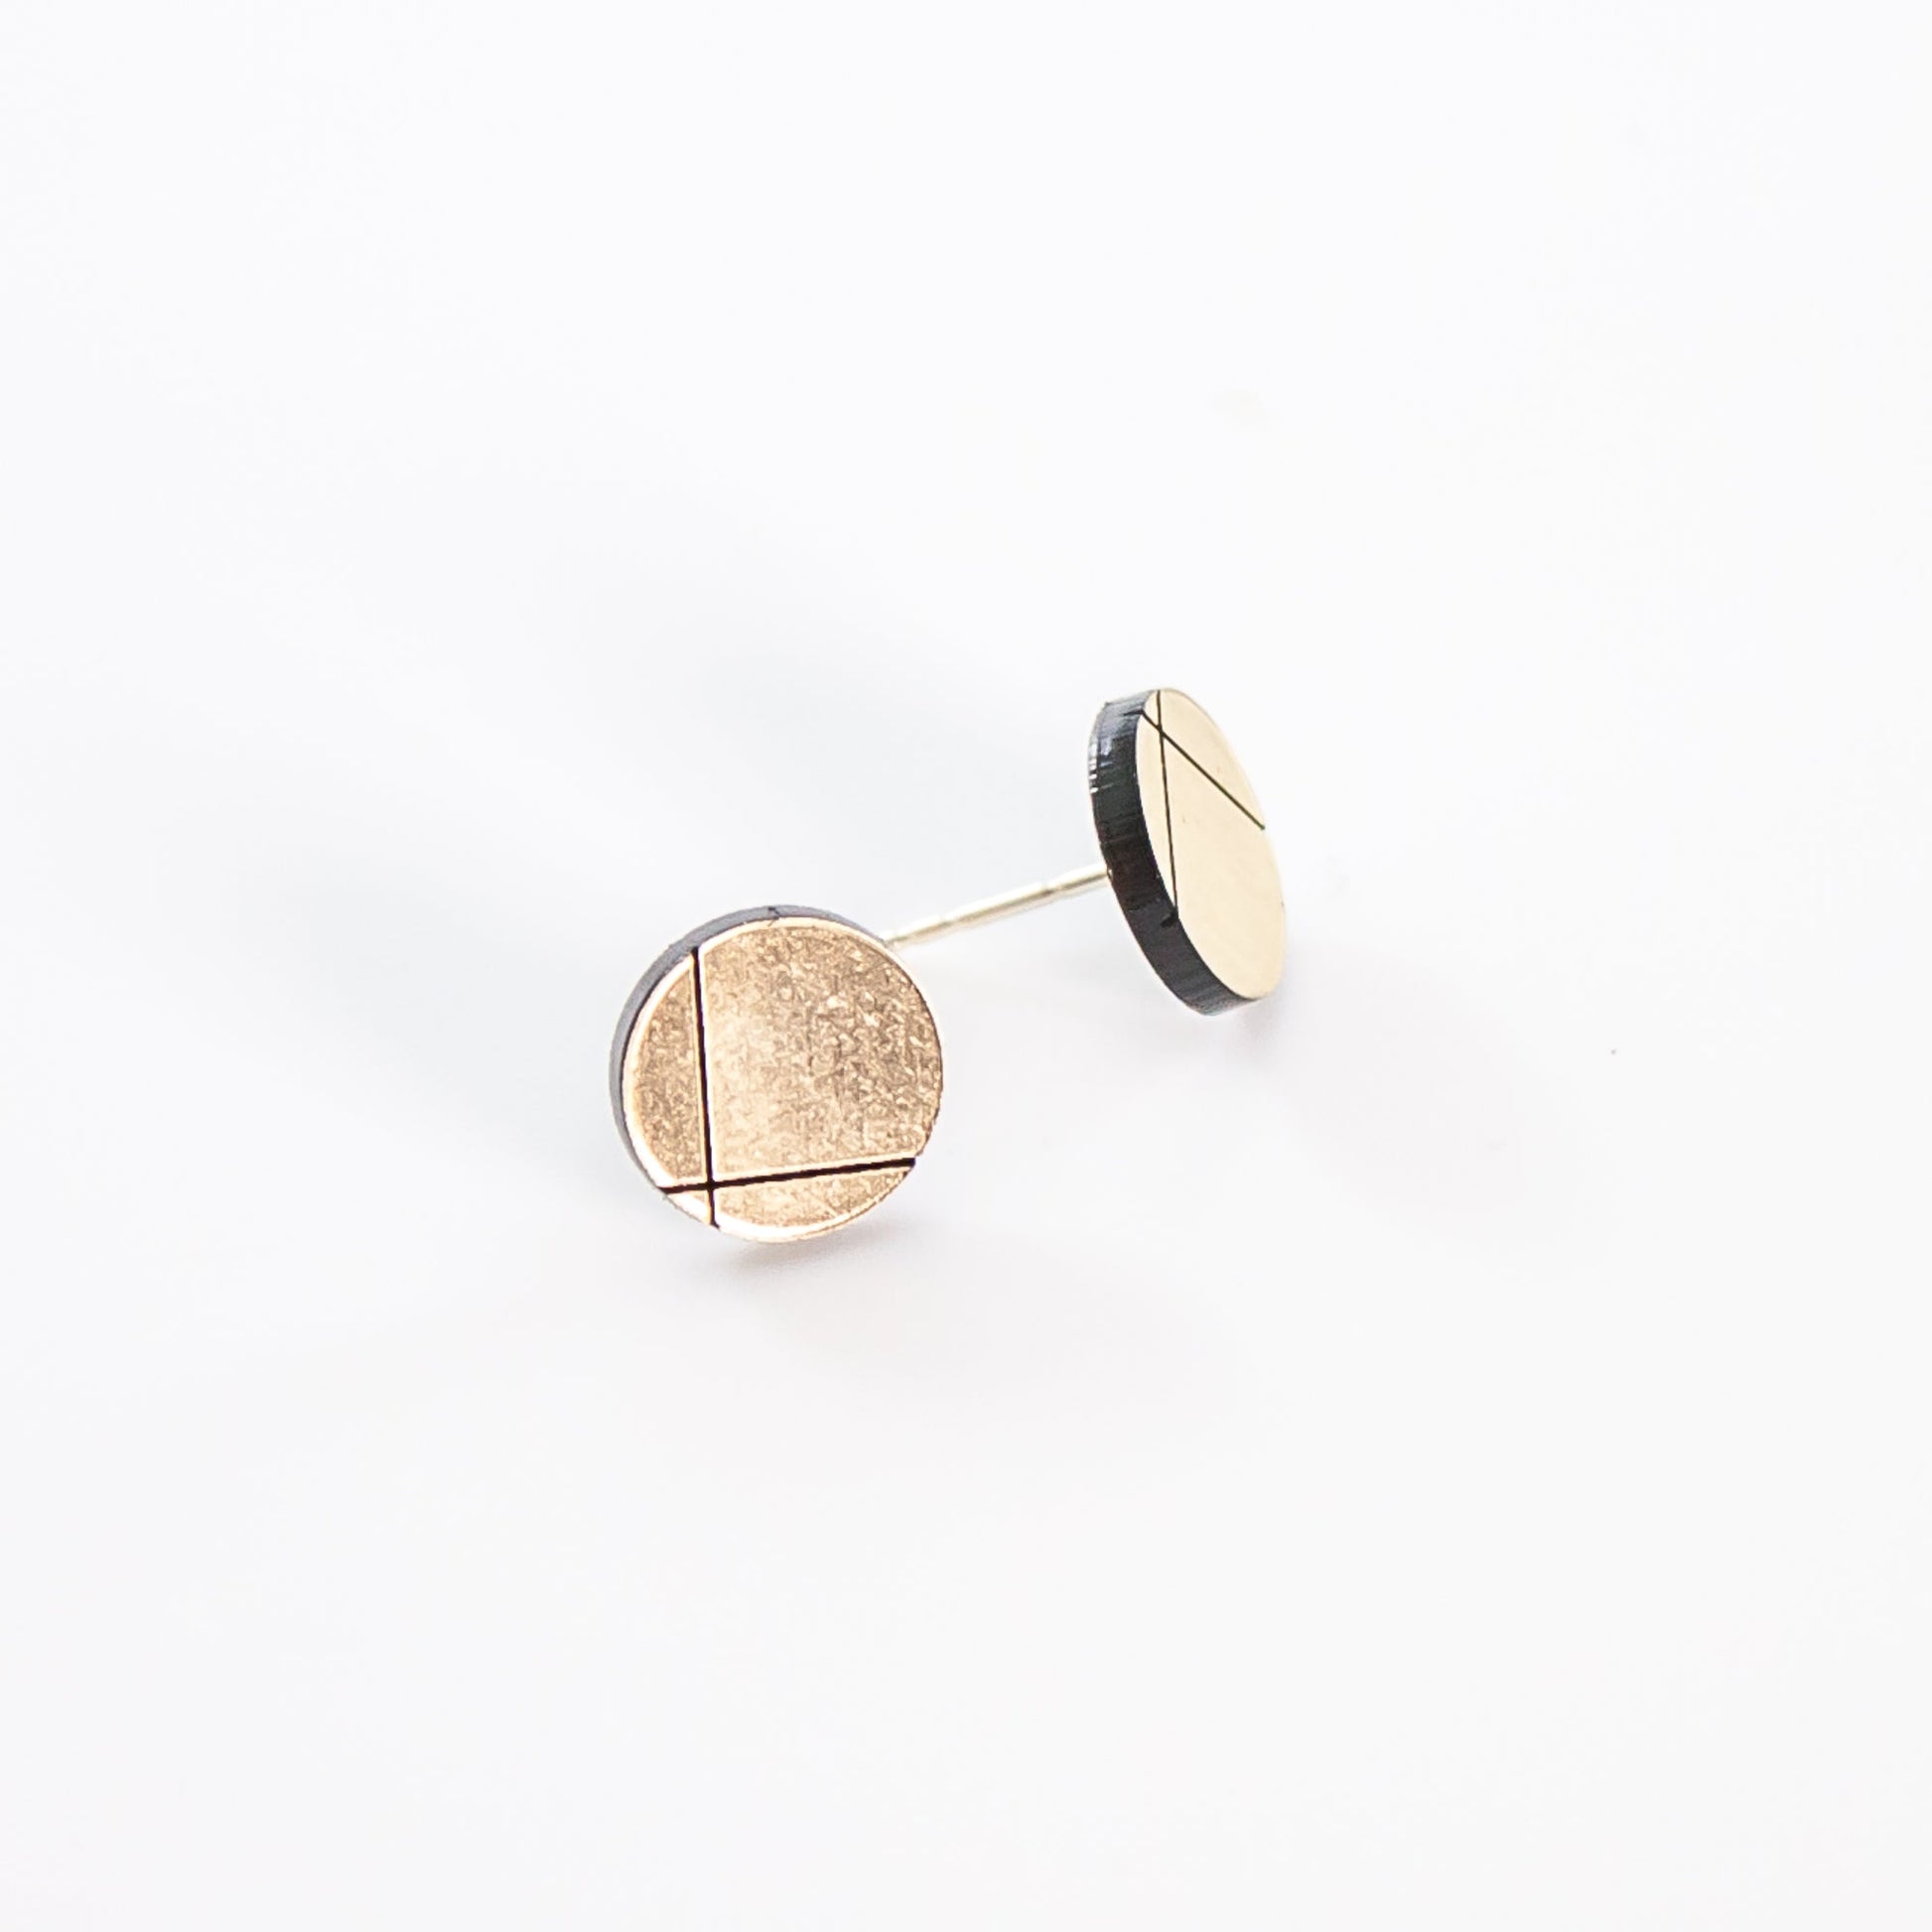 Laser Cut Geometric Earrings - Gold Acrylic GeoStud Circles - by LeeMo Designs in Bend, Oregon